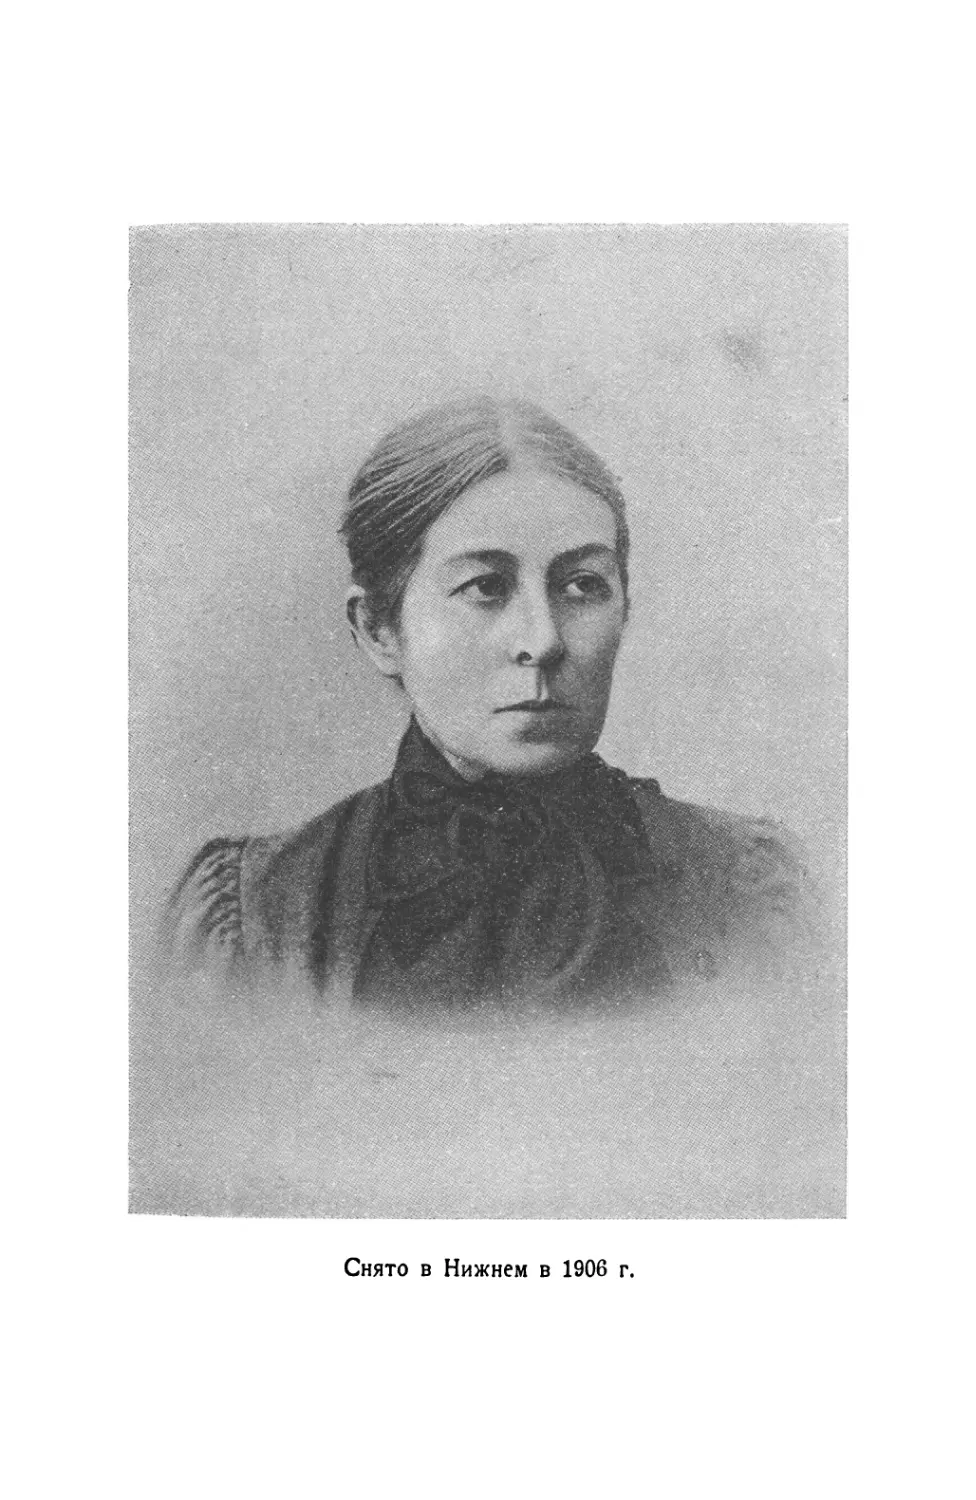 Фото: В. Н. Фигнер в 1906 г.